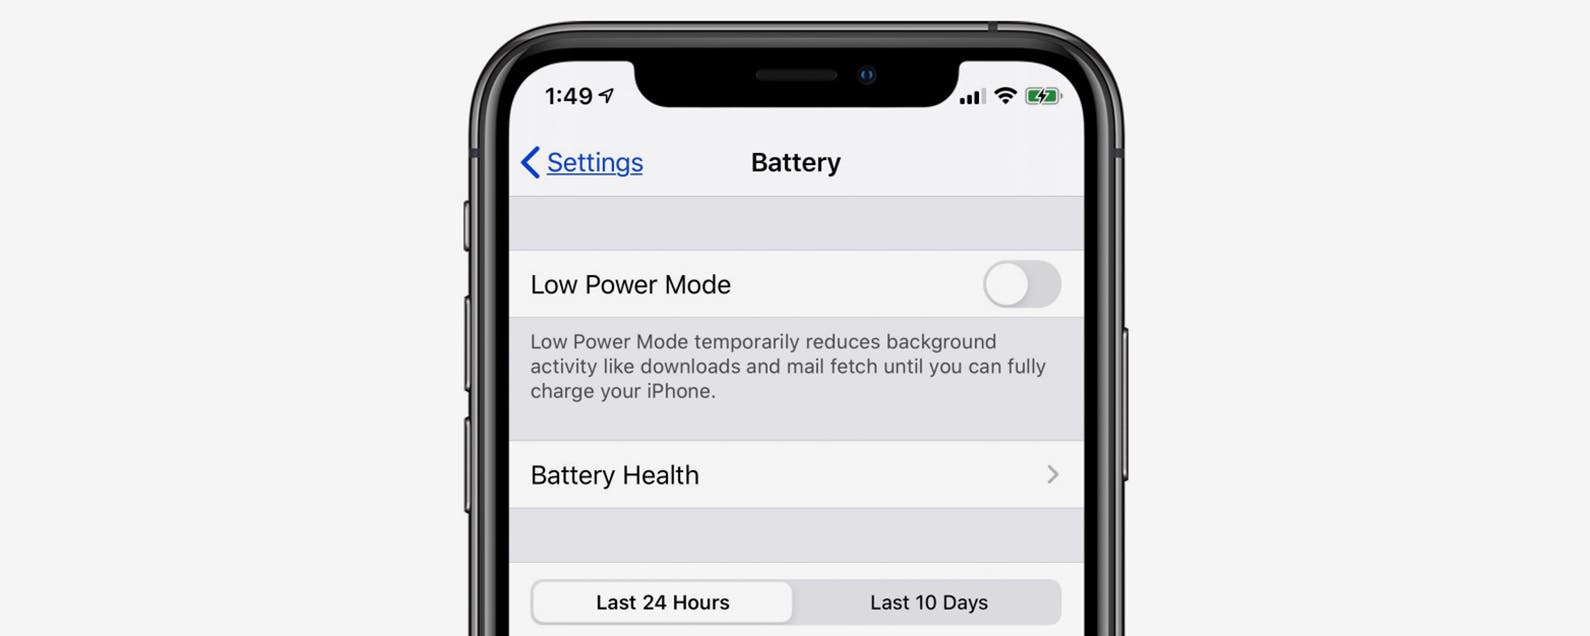 iphone 6 battery indicator wrong